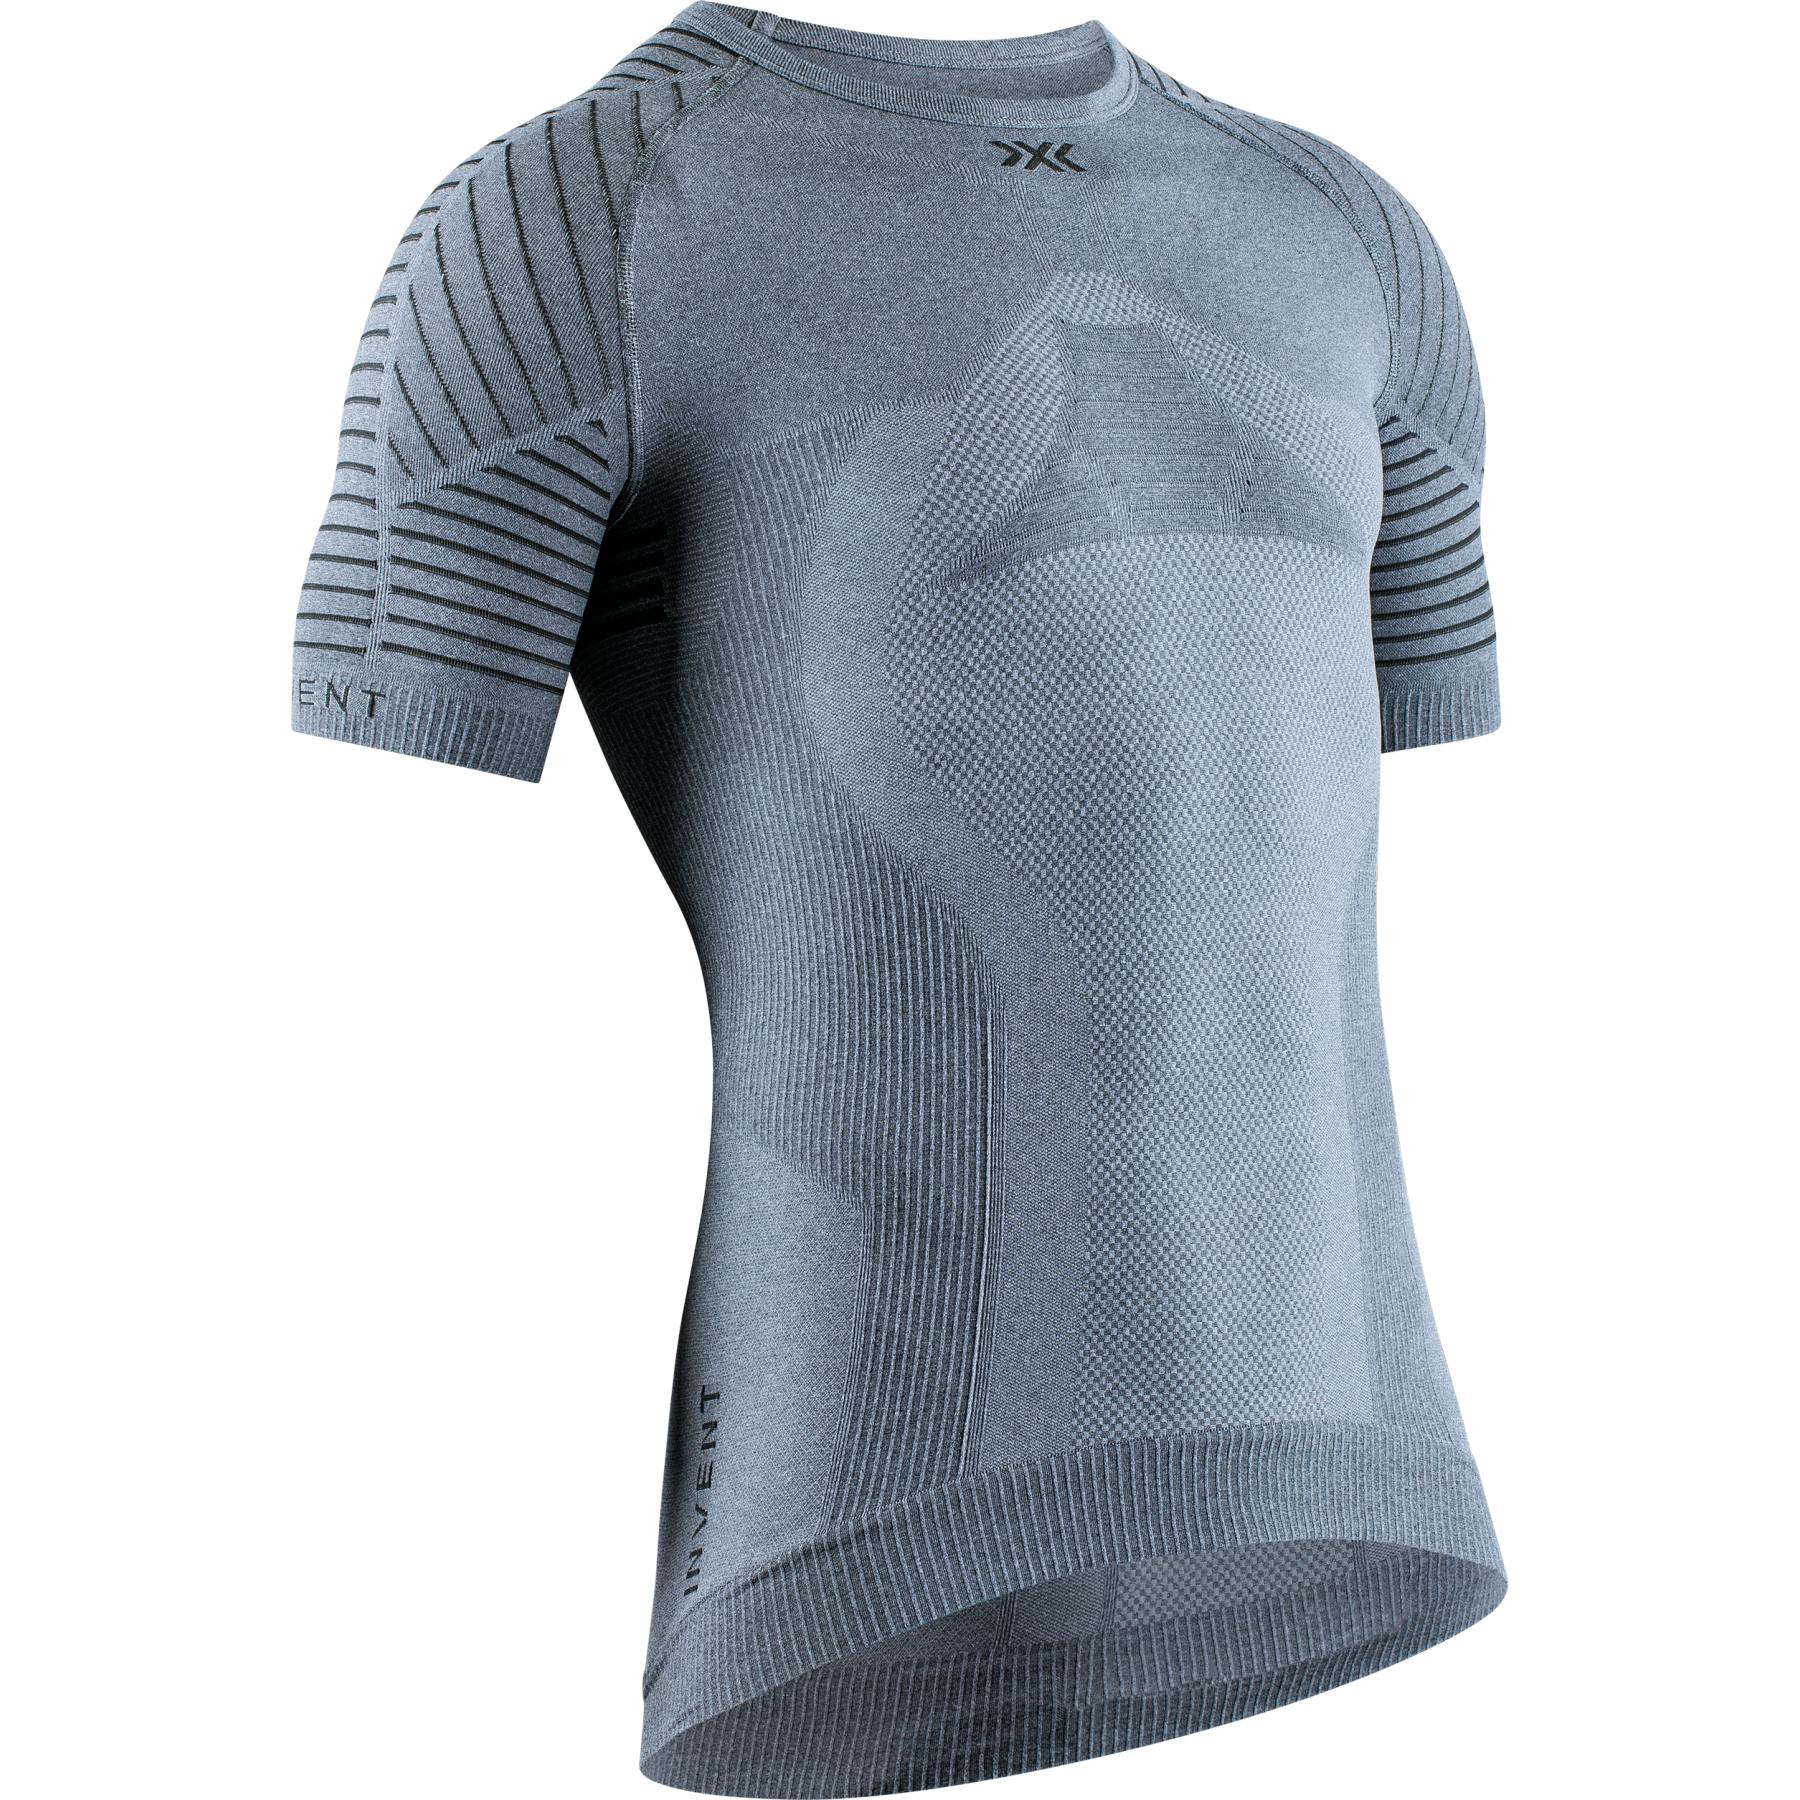 Picture of X-Bionic Invent 4.0 LT Round Neck Short Sleeves Shirt Men - grey melange/anthracite